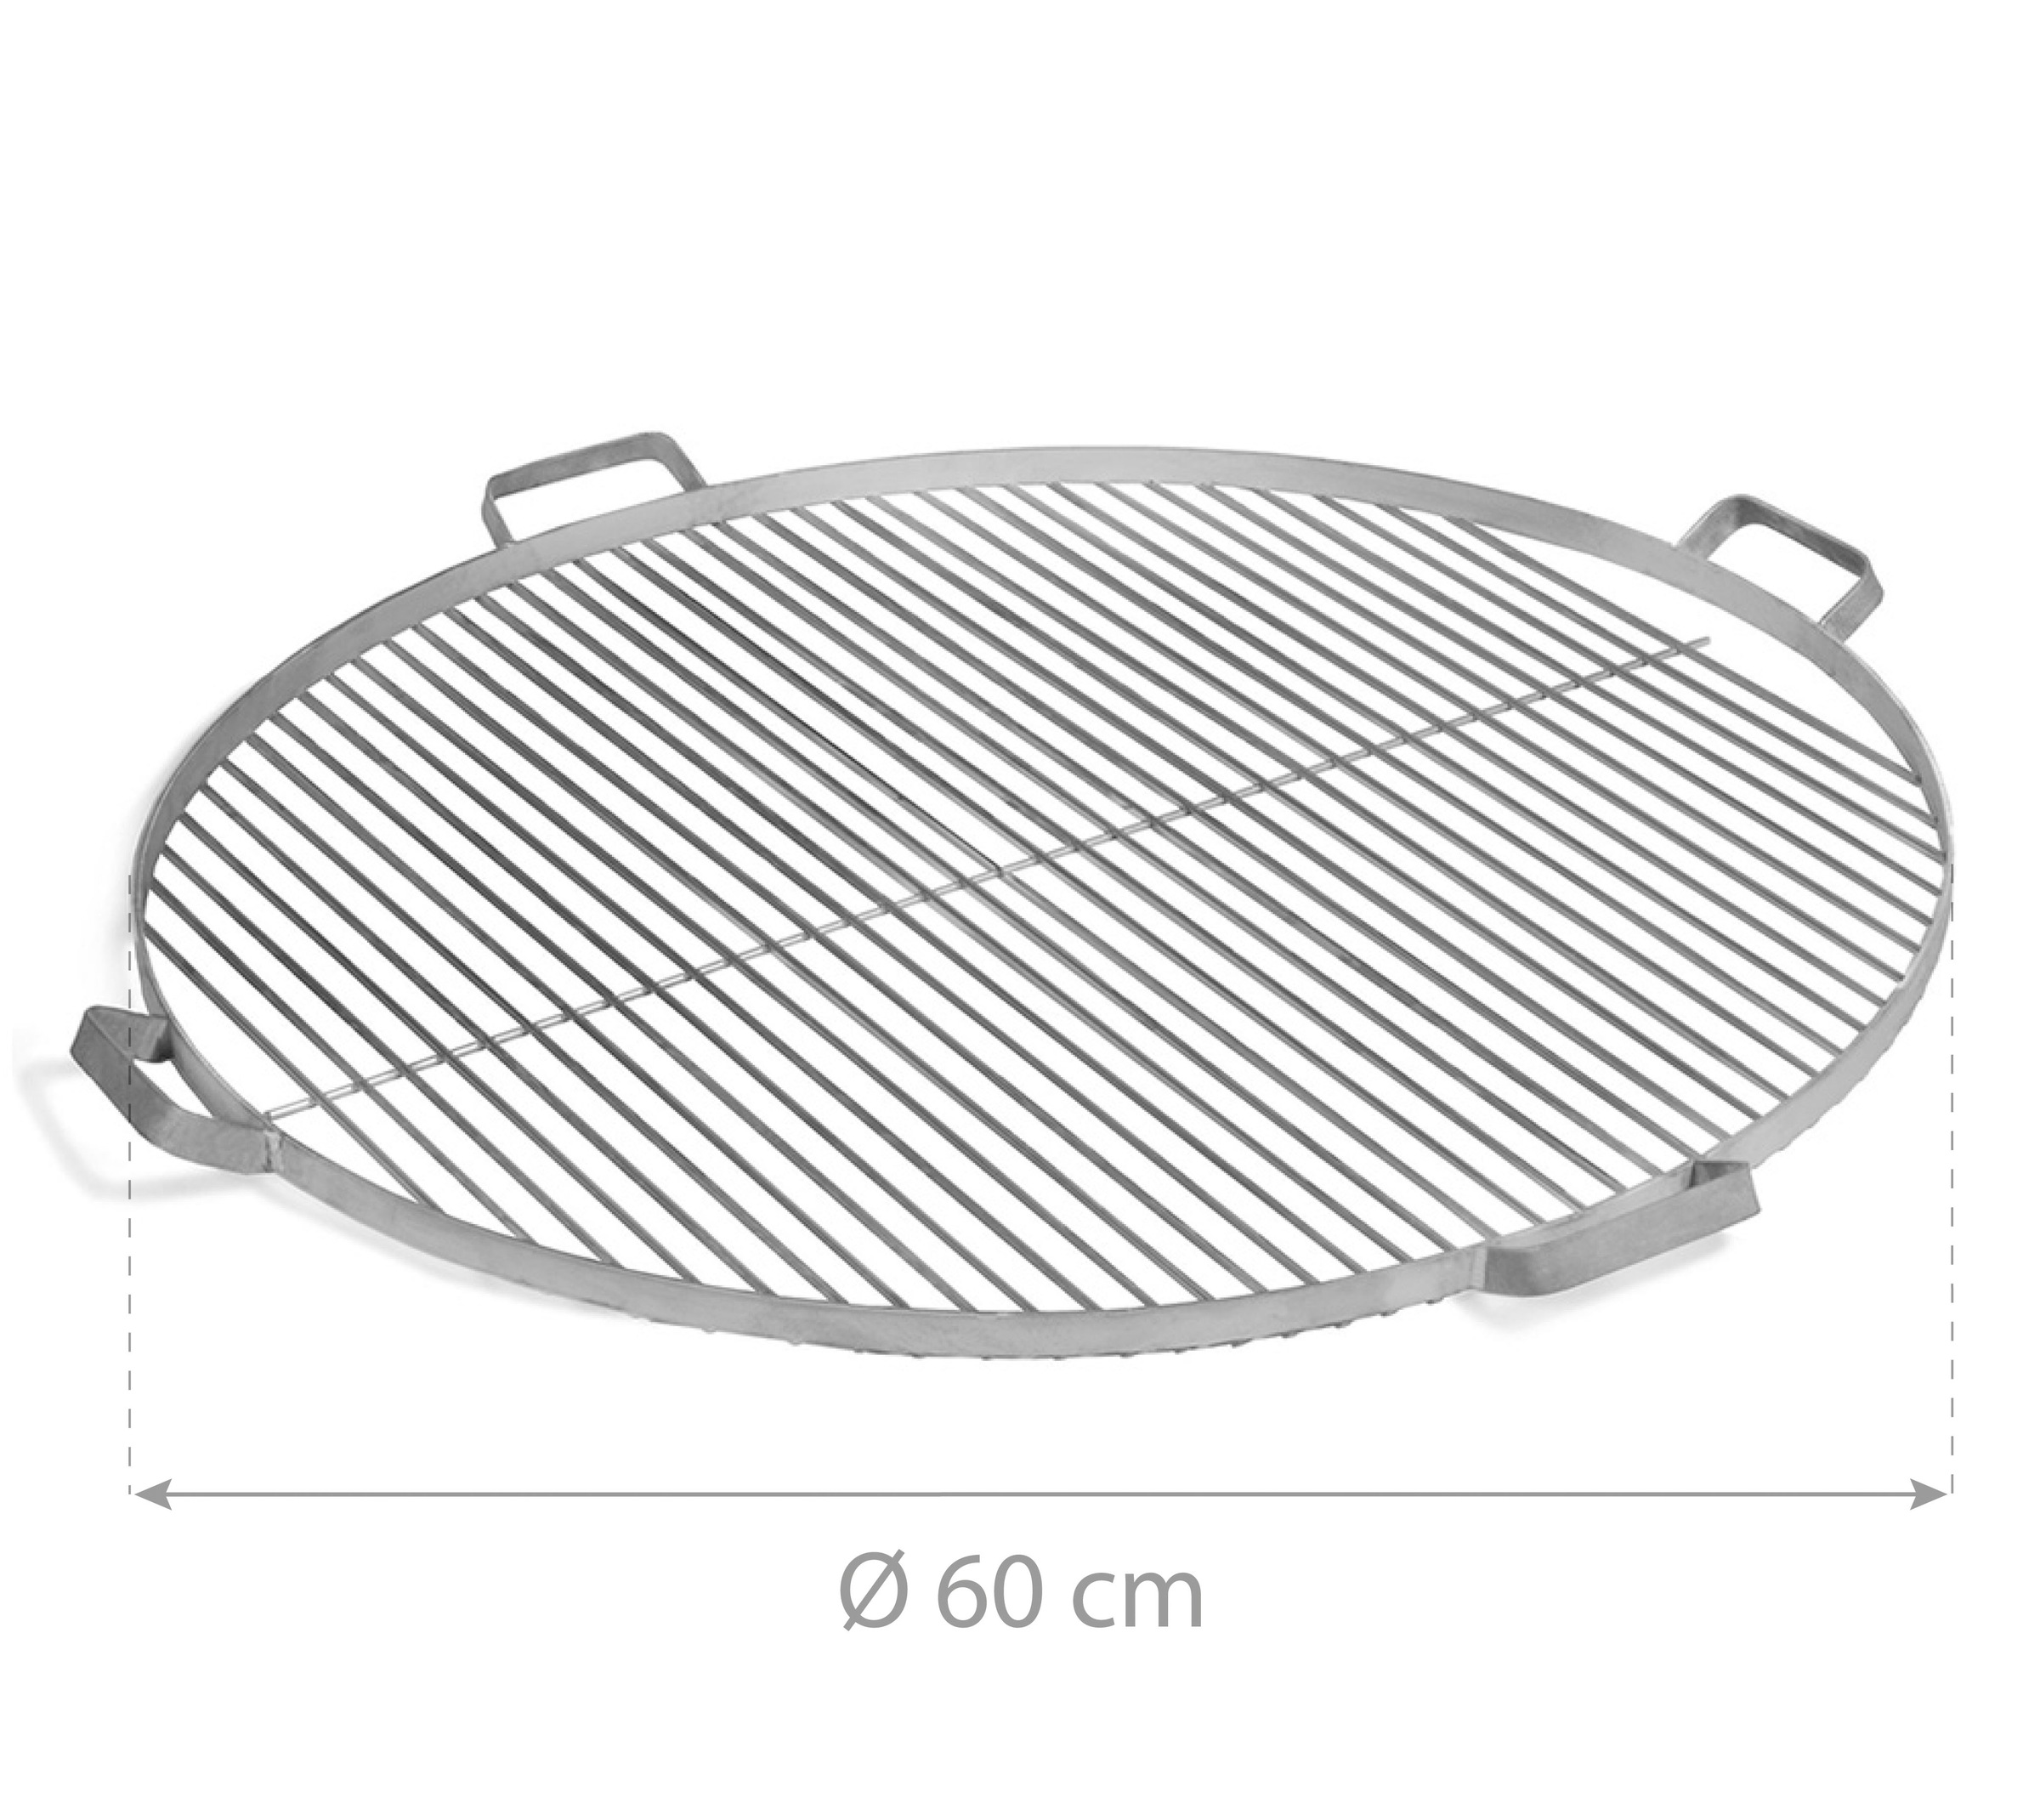 CookKing Grillrost, inkl. 4 Griffen, Ø 60 cm